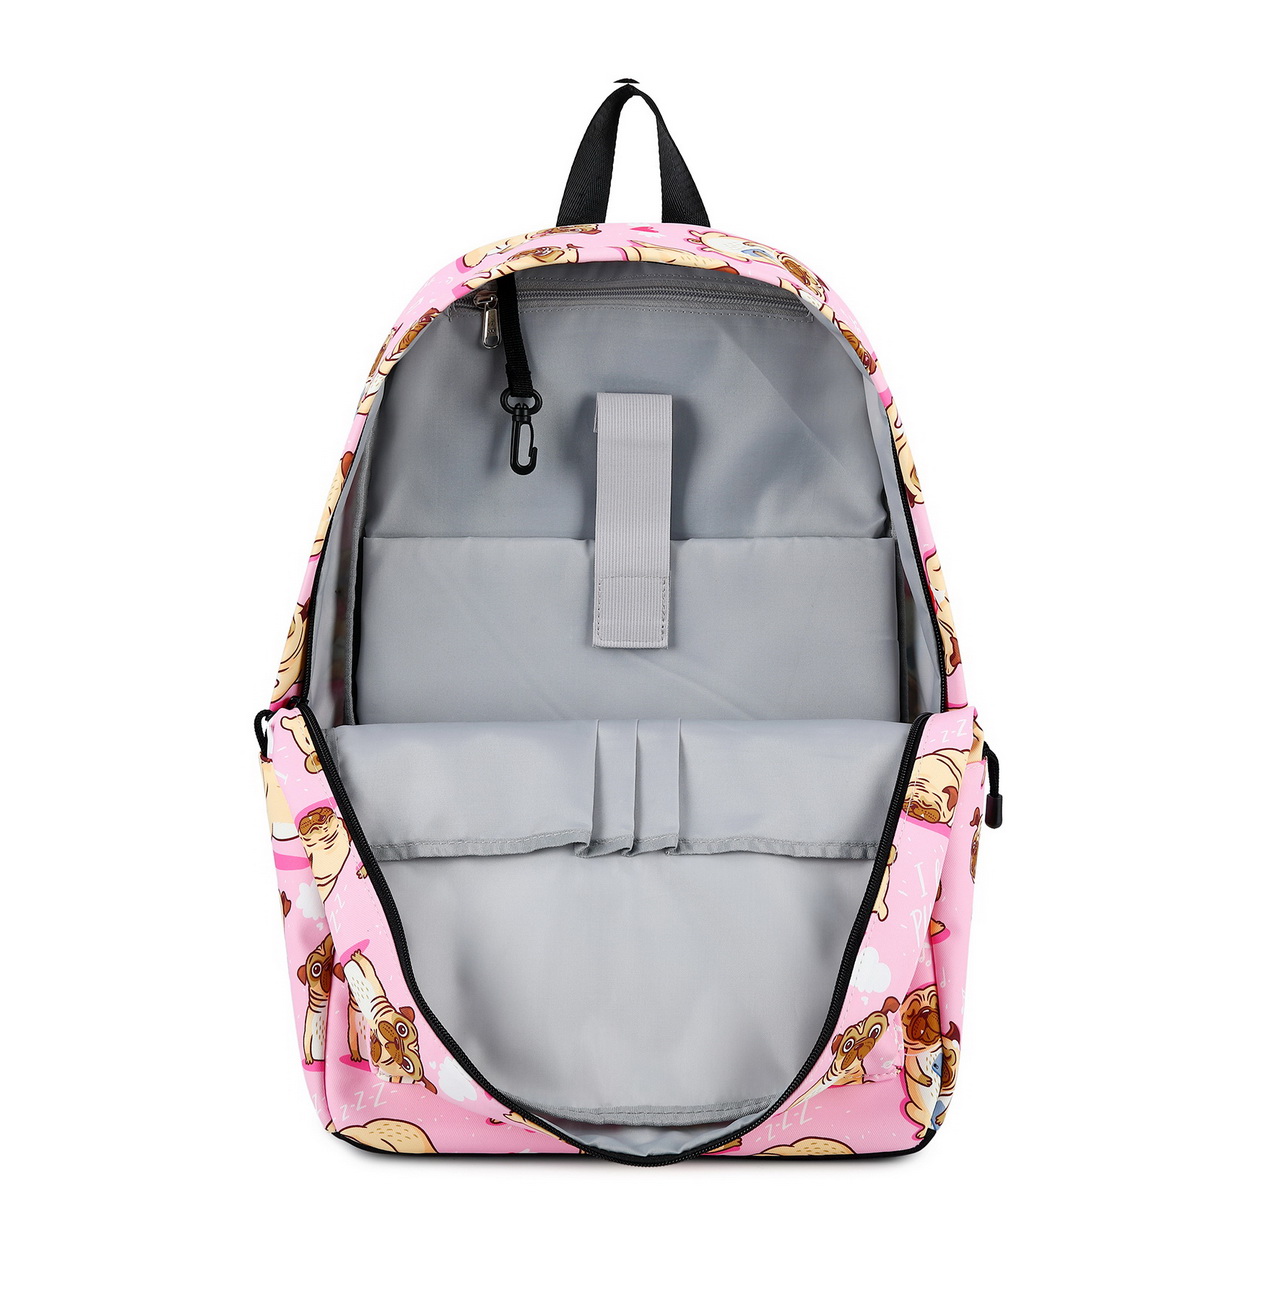 VIRTUREVI Cute Printed School Backpack for Girl